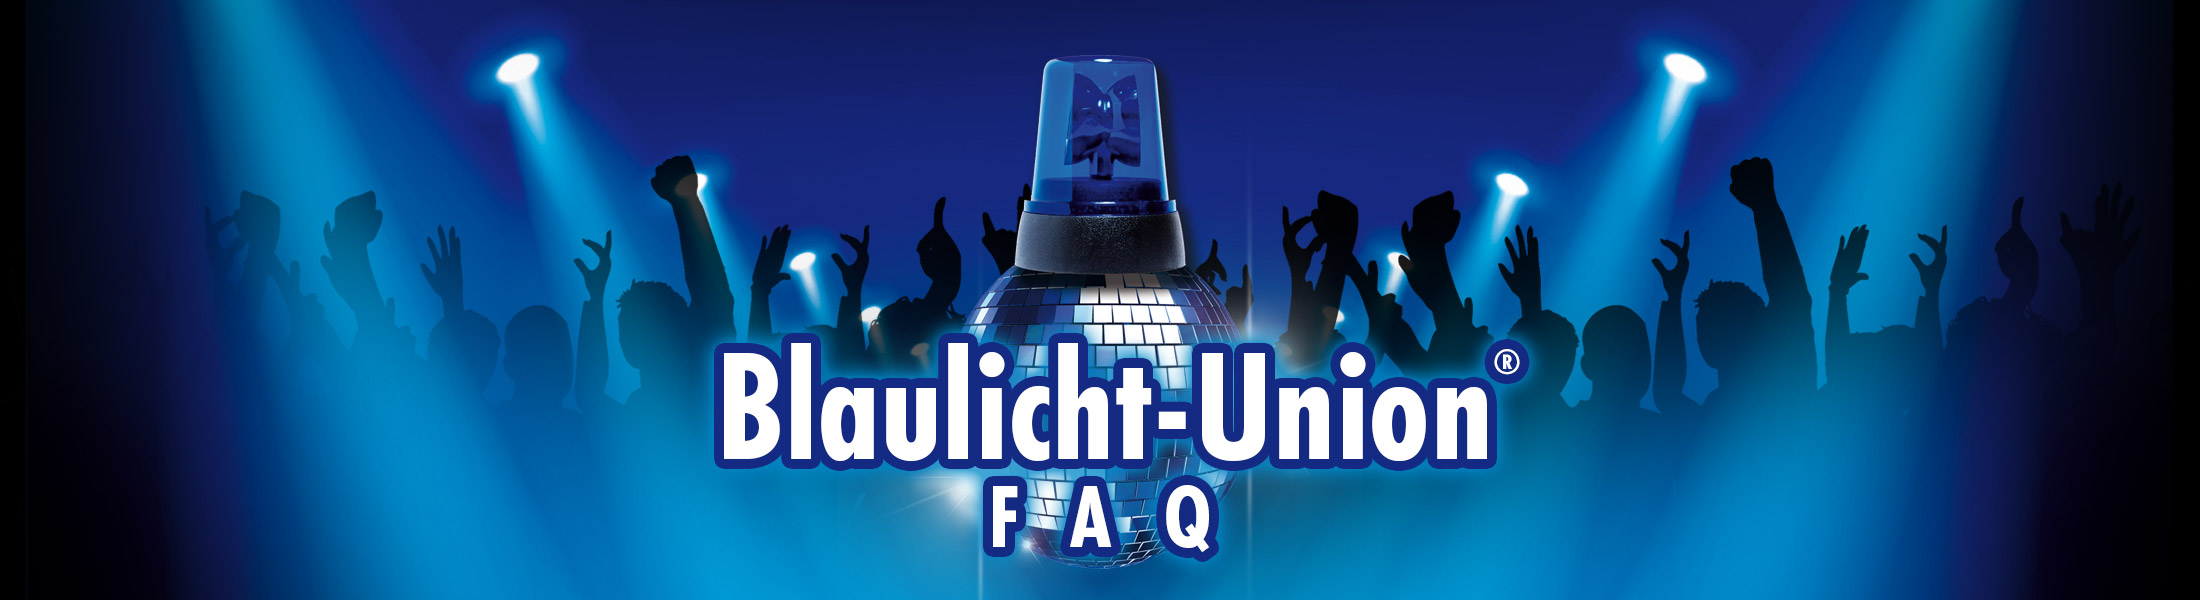 Blaulicht Union Party® FAQ